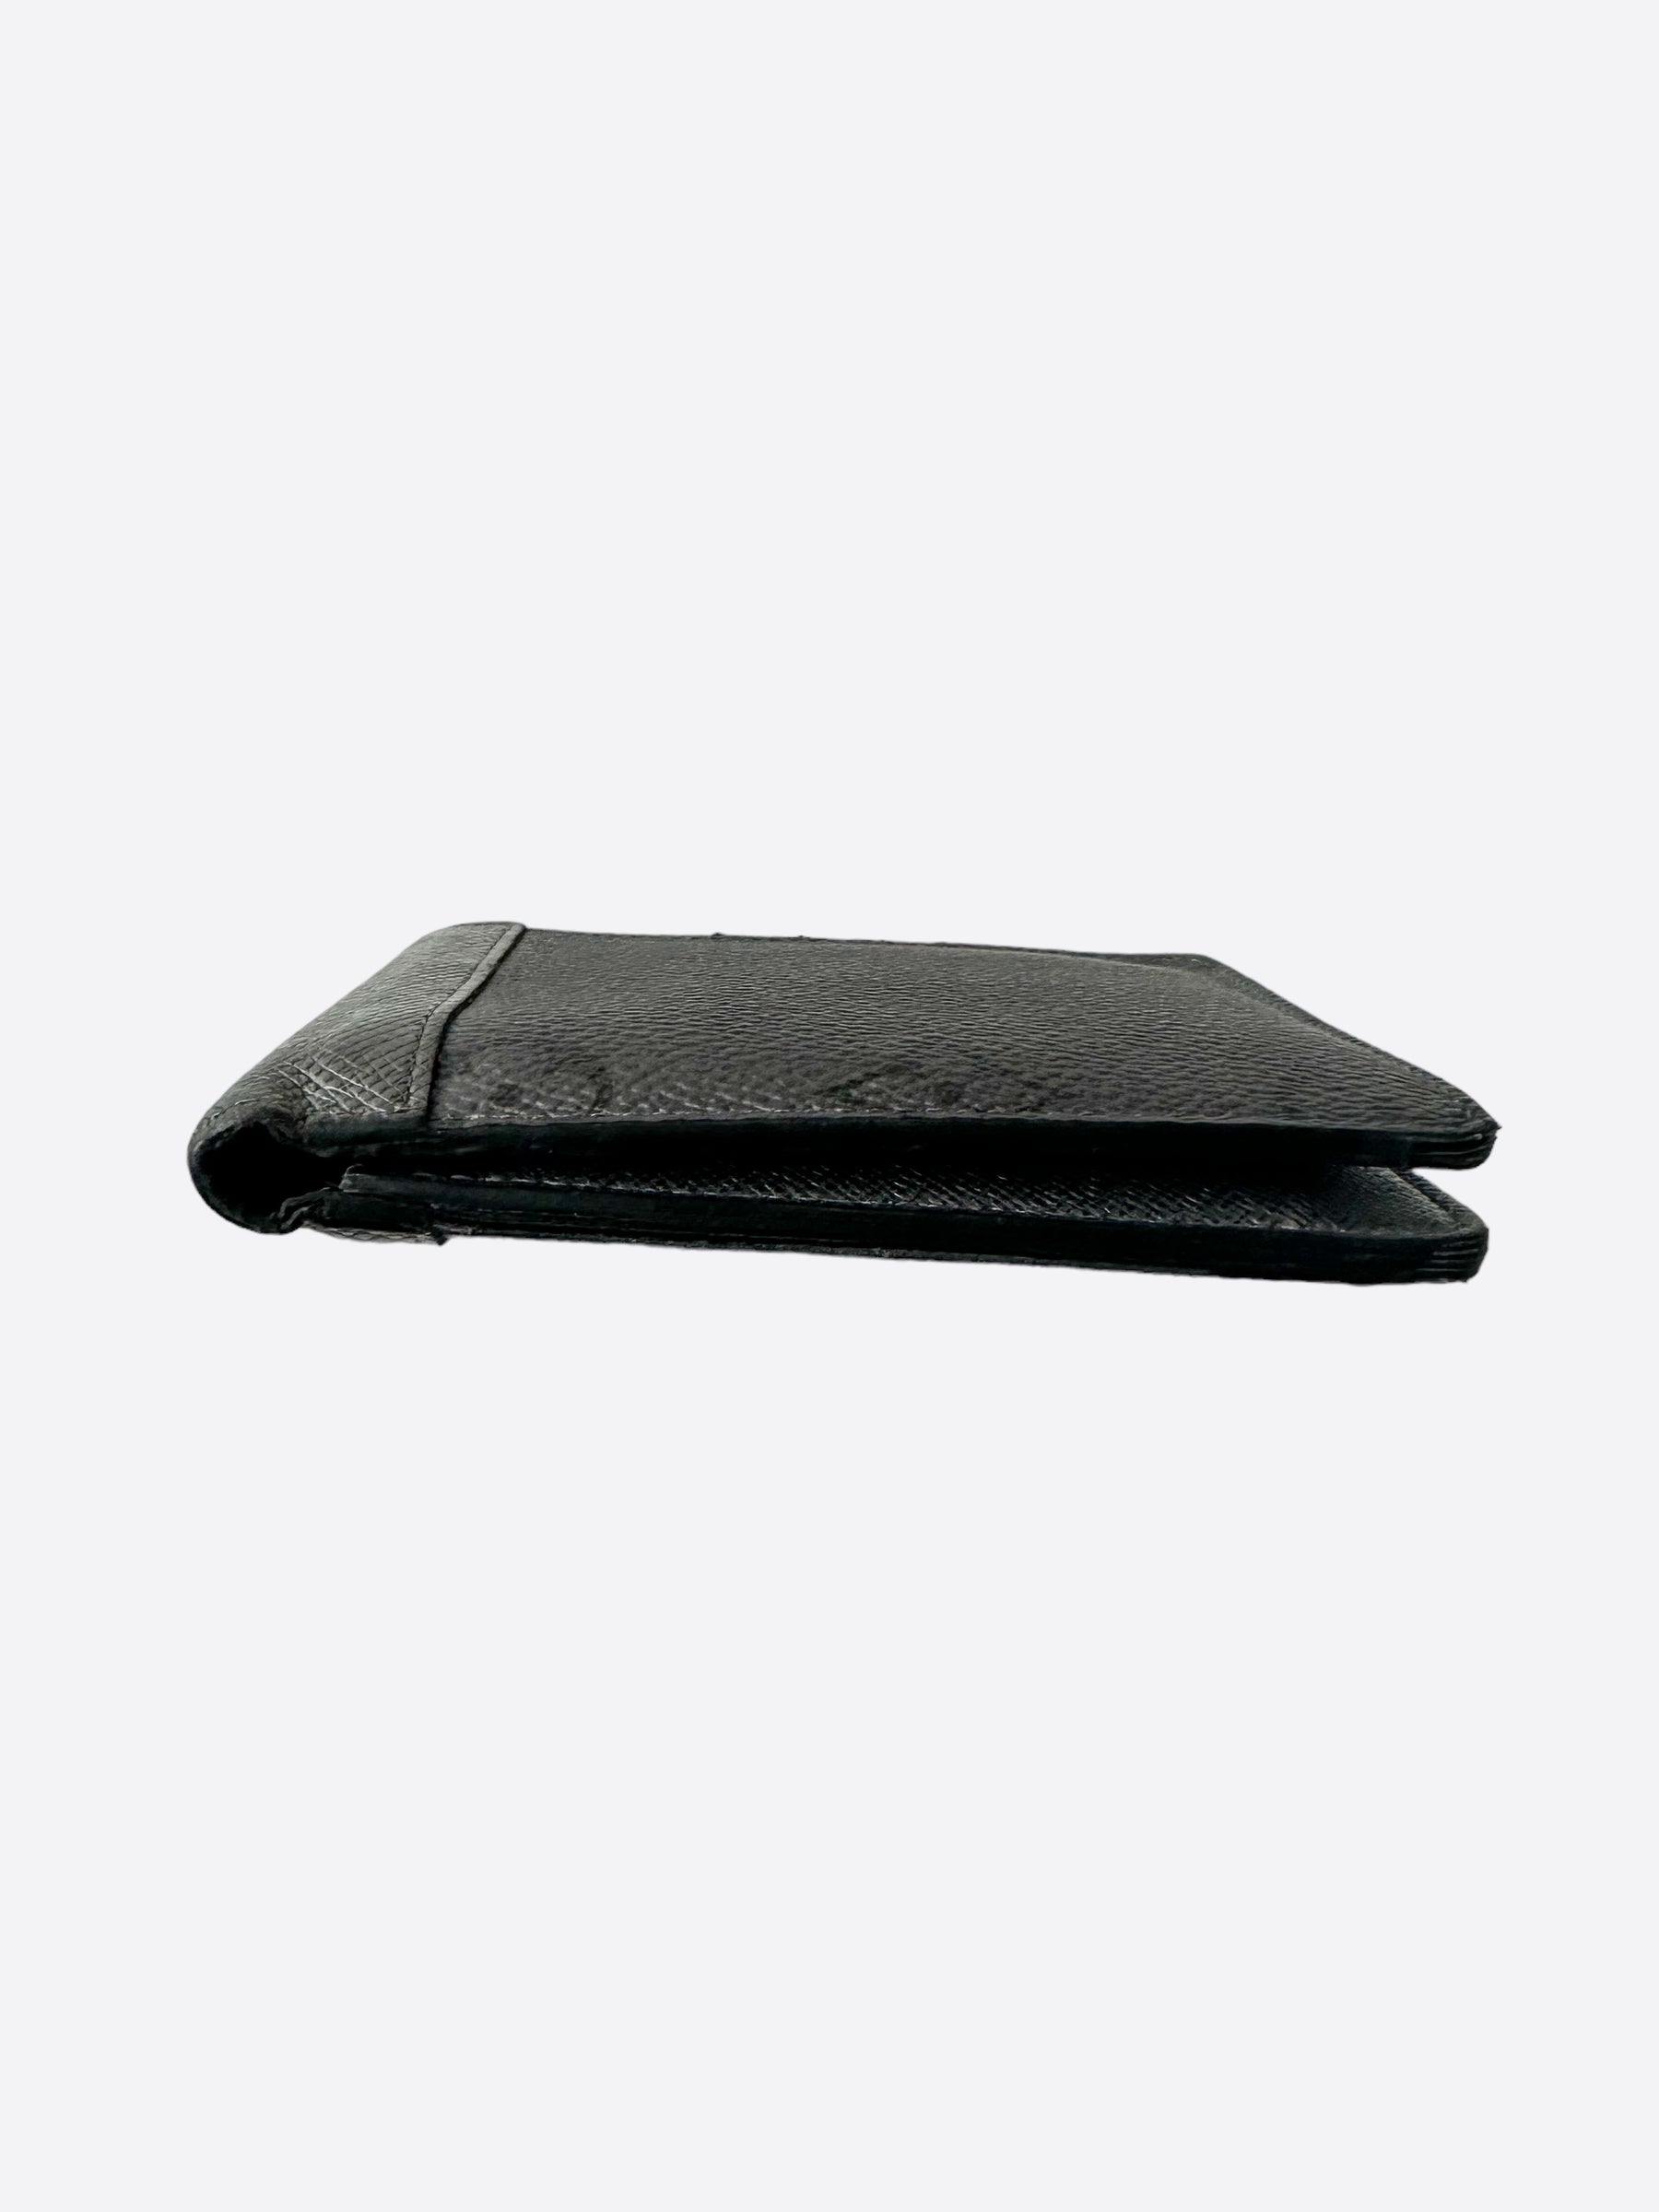 Saint Laurent Chain Wallet Monogram Black in Leather with Gunmetal